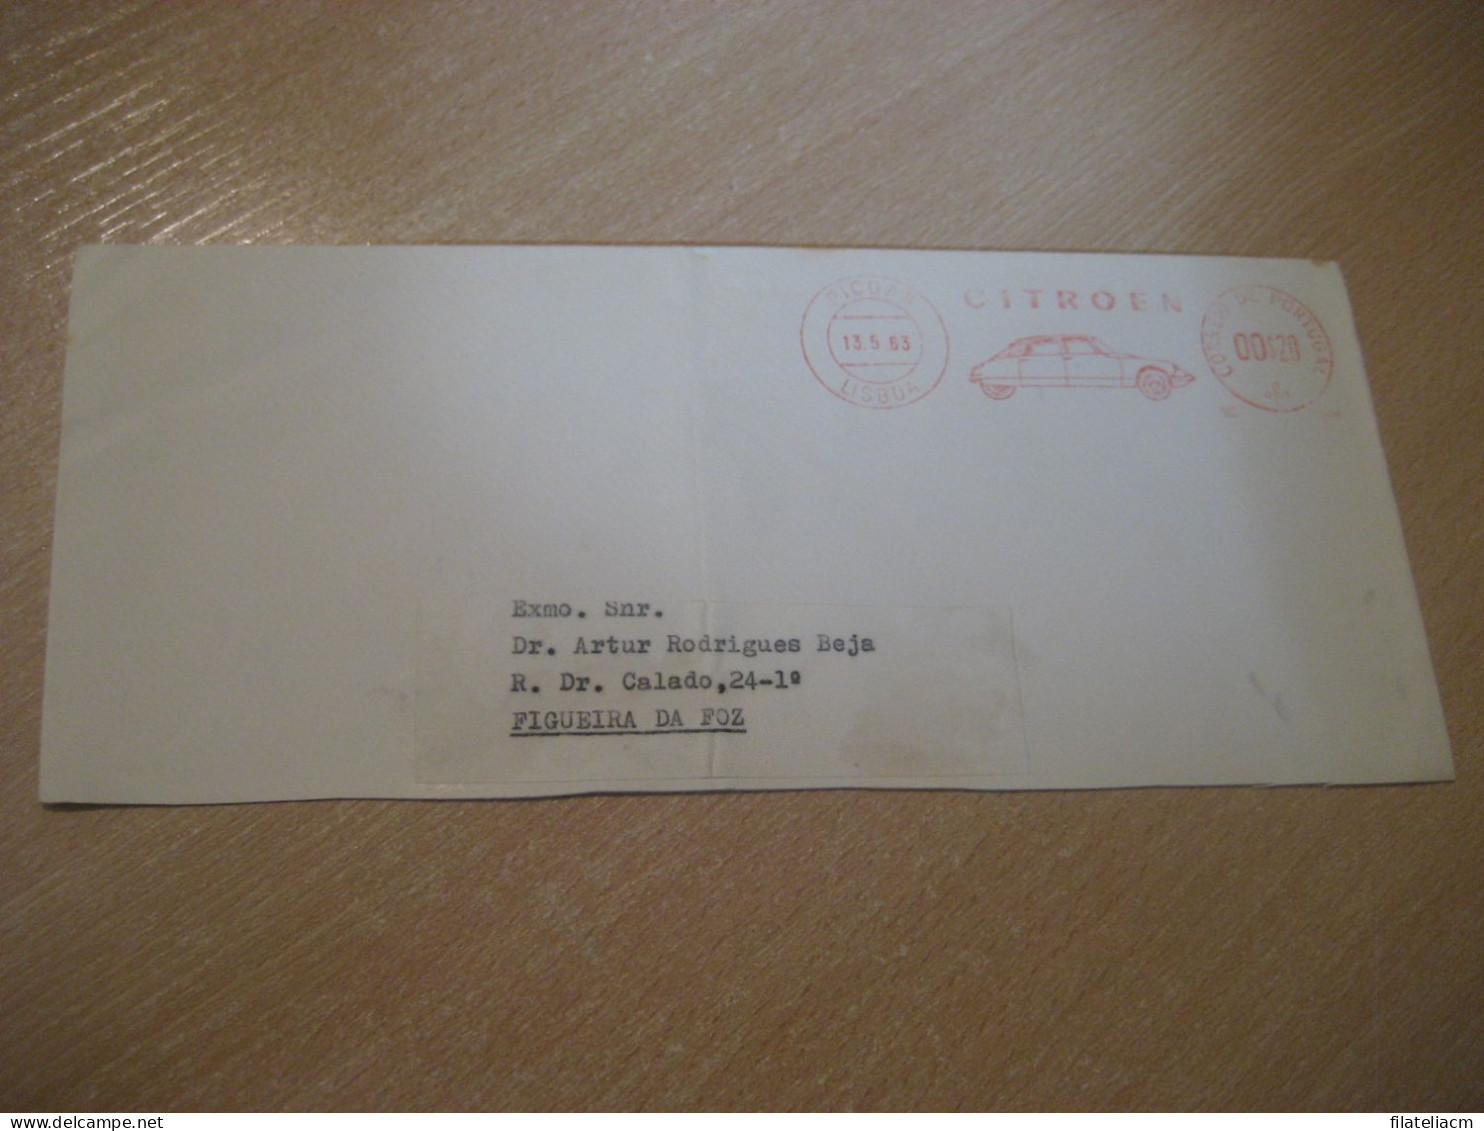 LISBOA 1963 To Figueira Da Foz CITROEN Auto Car Meter Mail Cancel Cut Cuted Cover PORTUGAL - Covers & Documents